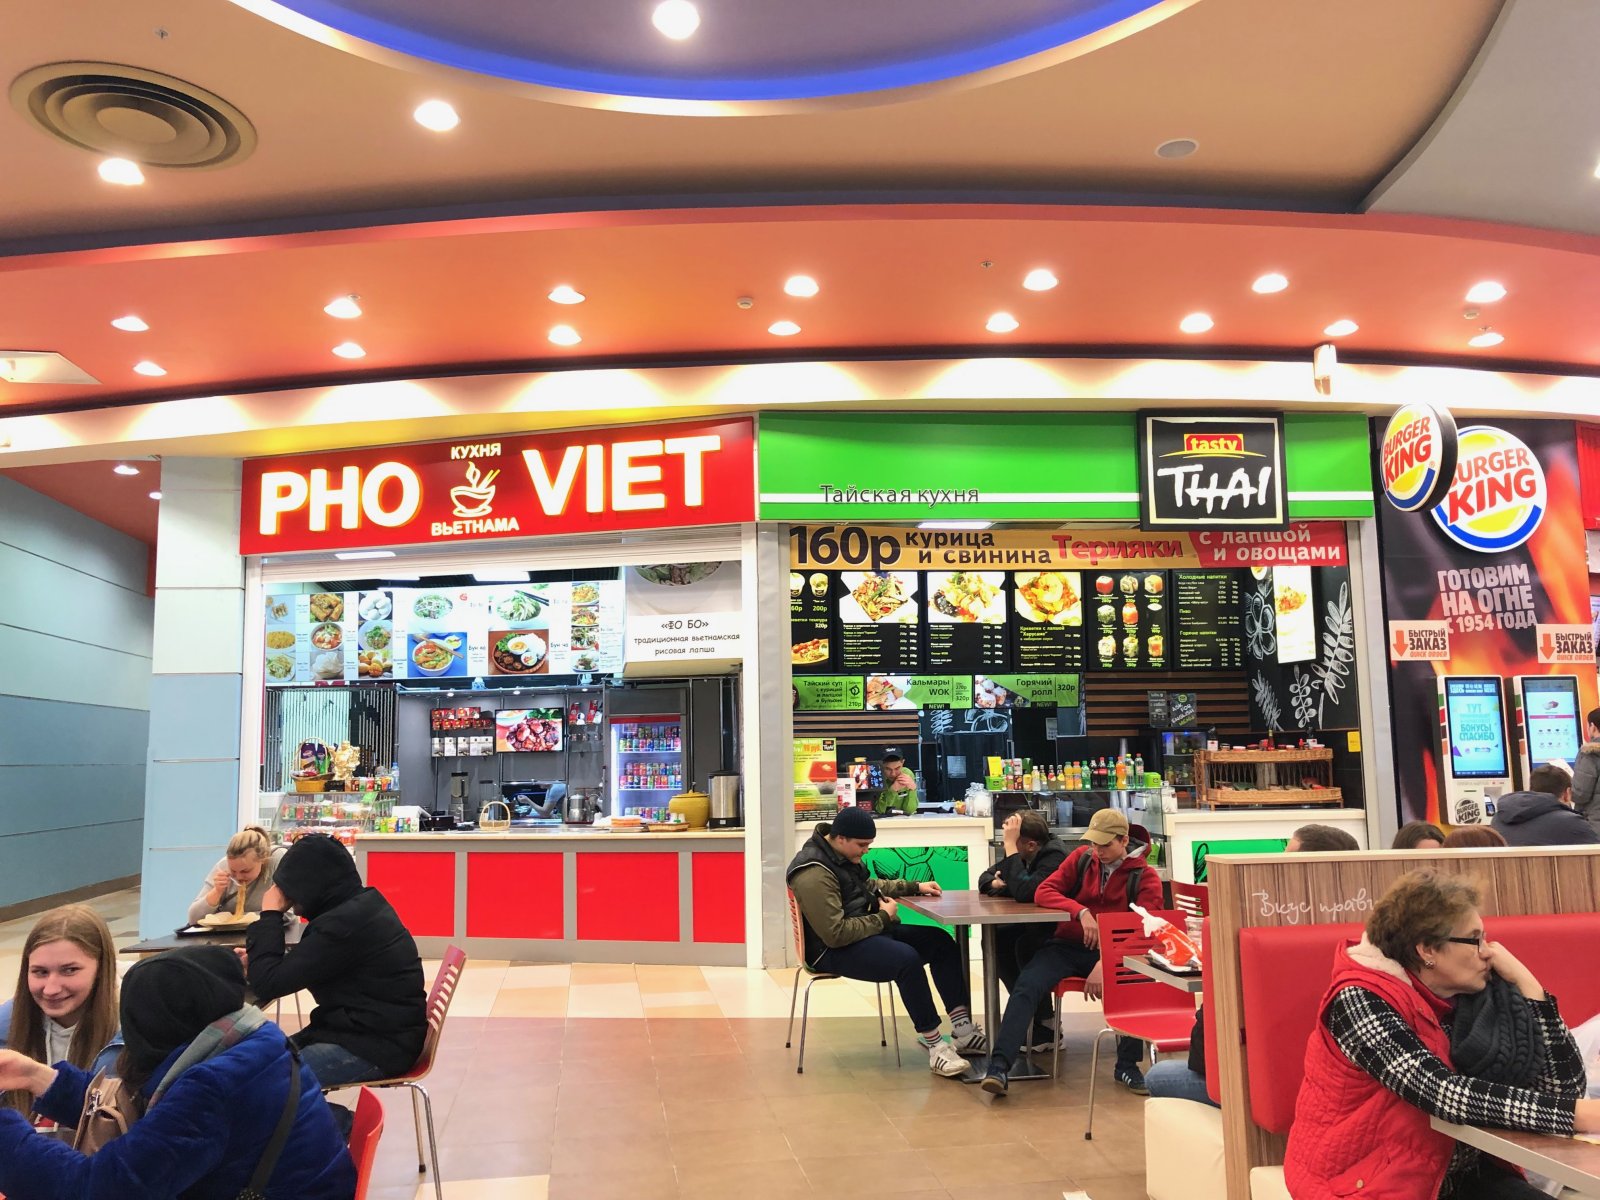 Pho Viet, кафе вьетнамской кухни, Багратионовский проезд, 5, F8 павильон, 3 этаж